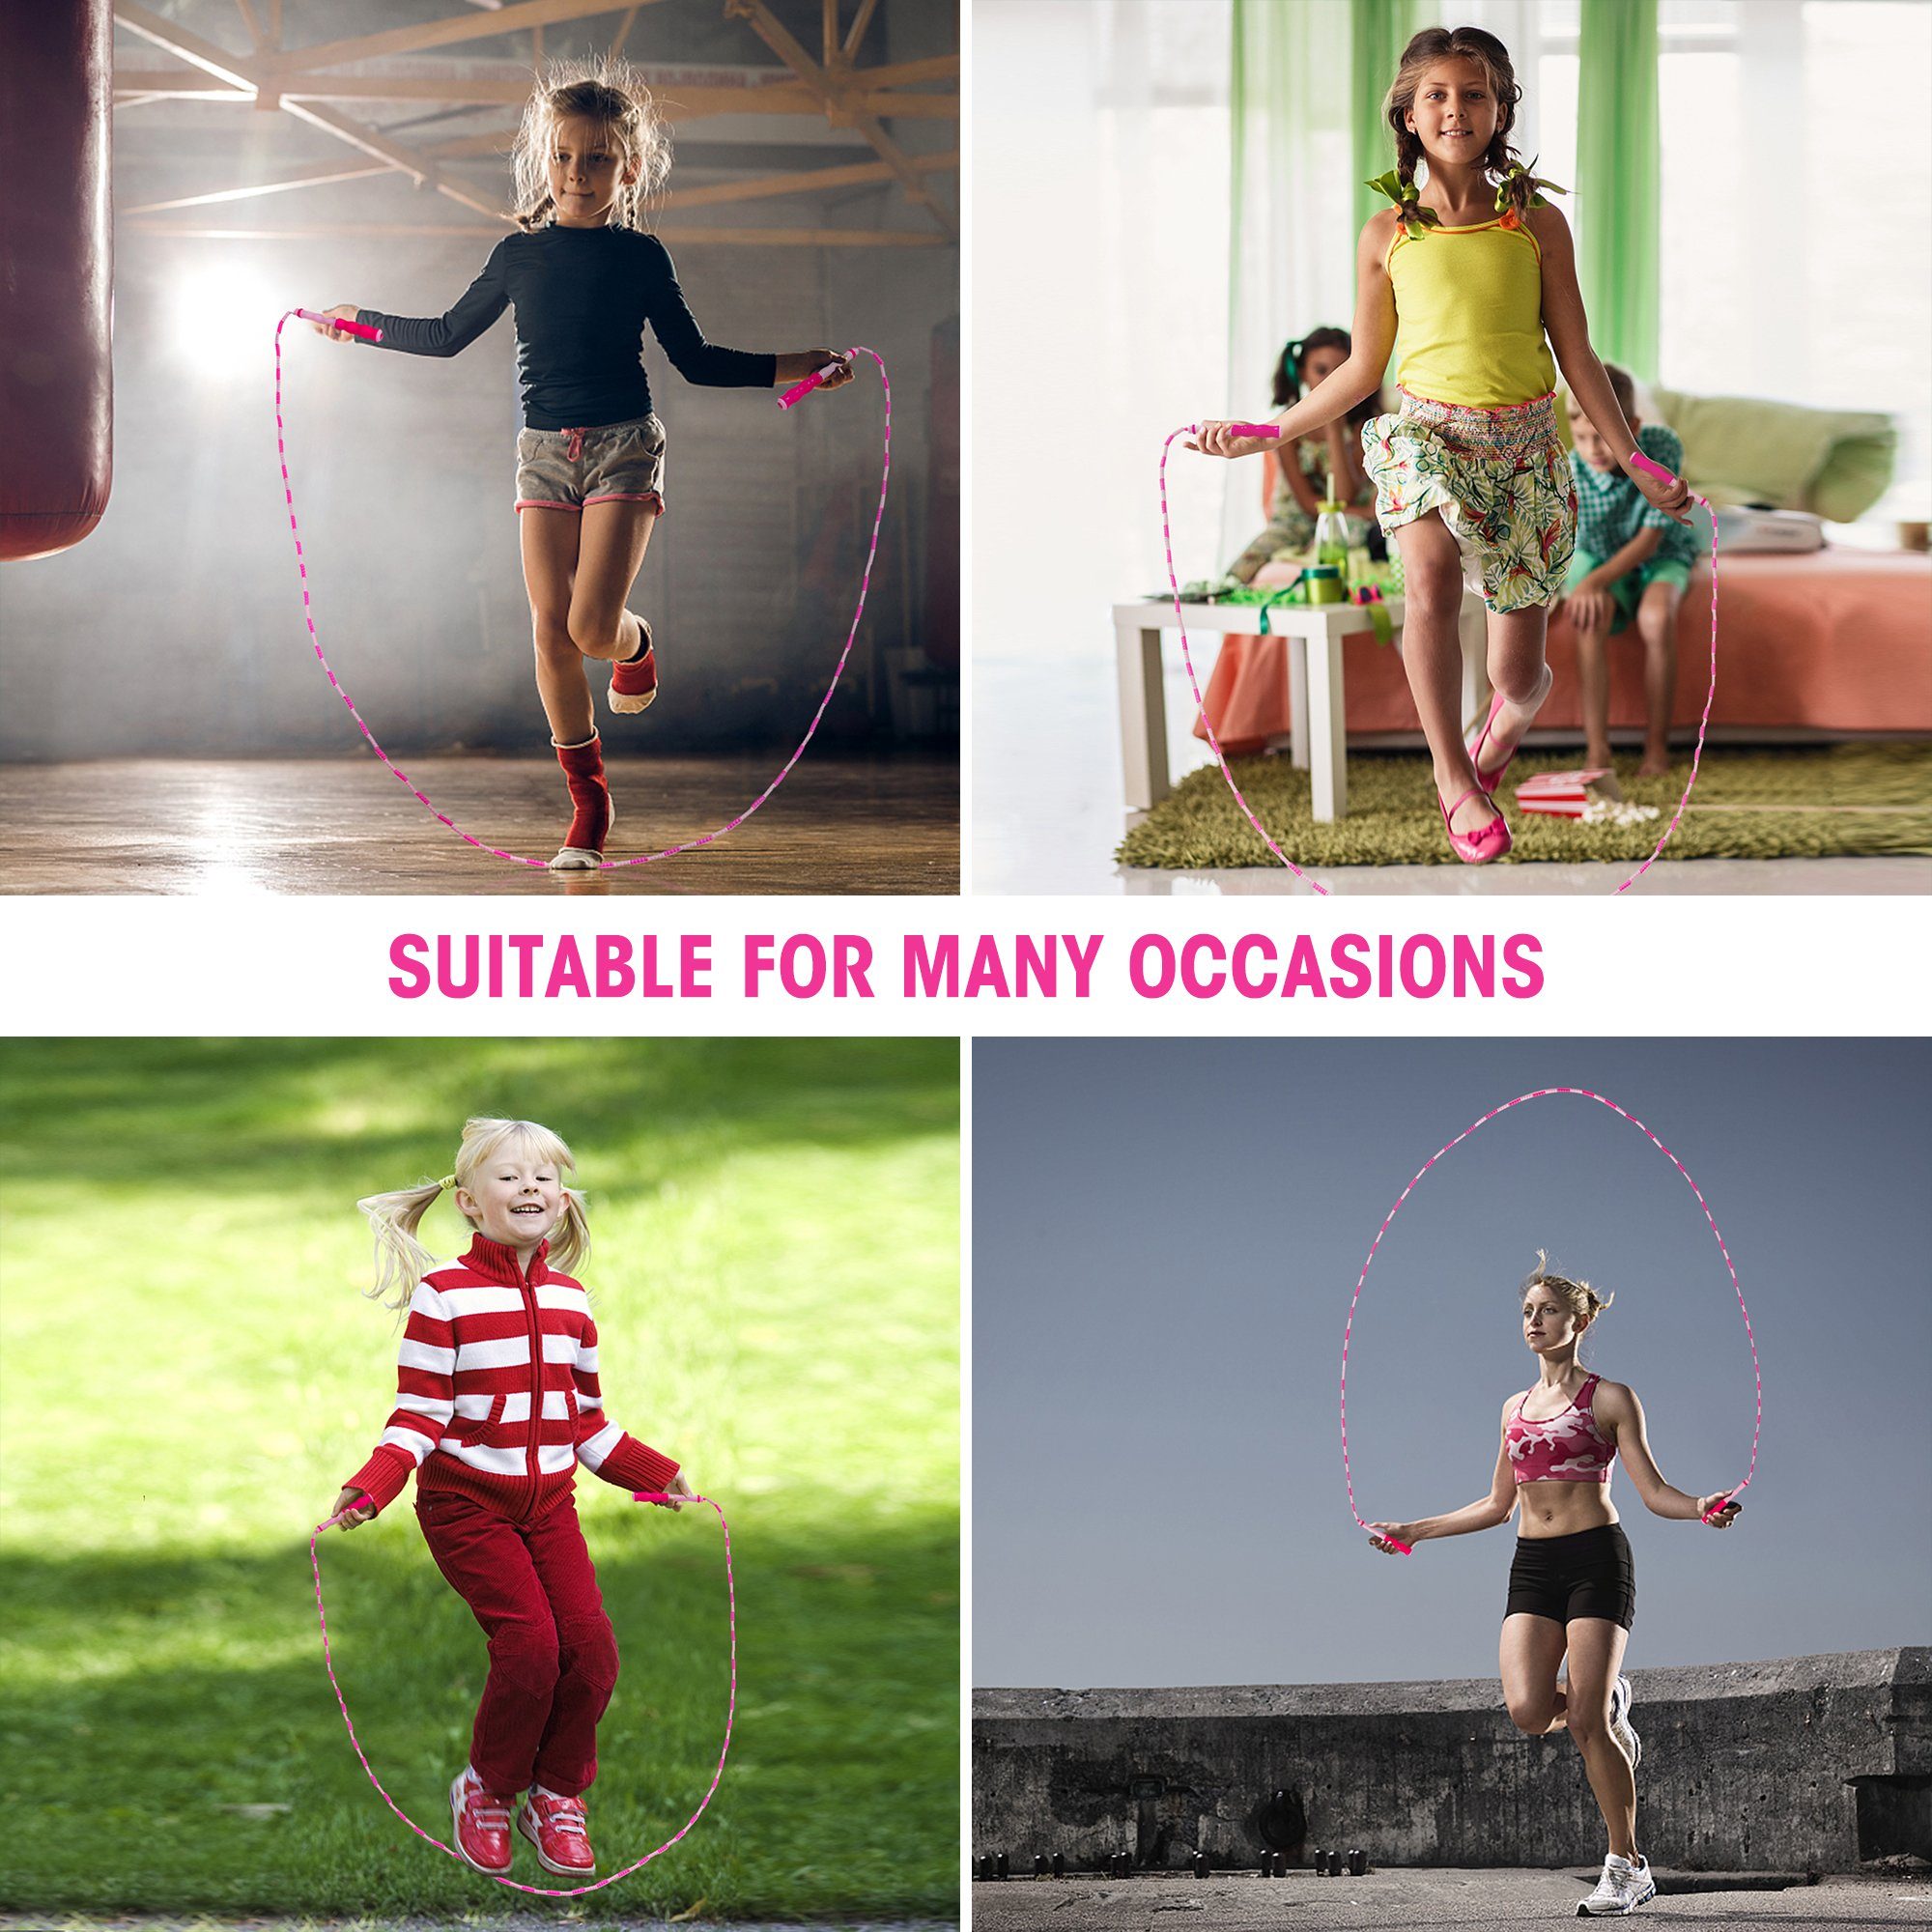 rosa verstellbar 280 cm, Seillänge verstellbares für Springseil, Kinder Jump Penelife Länge Springseil Beaded Rope und Erwachsene -